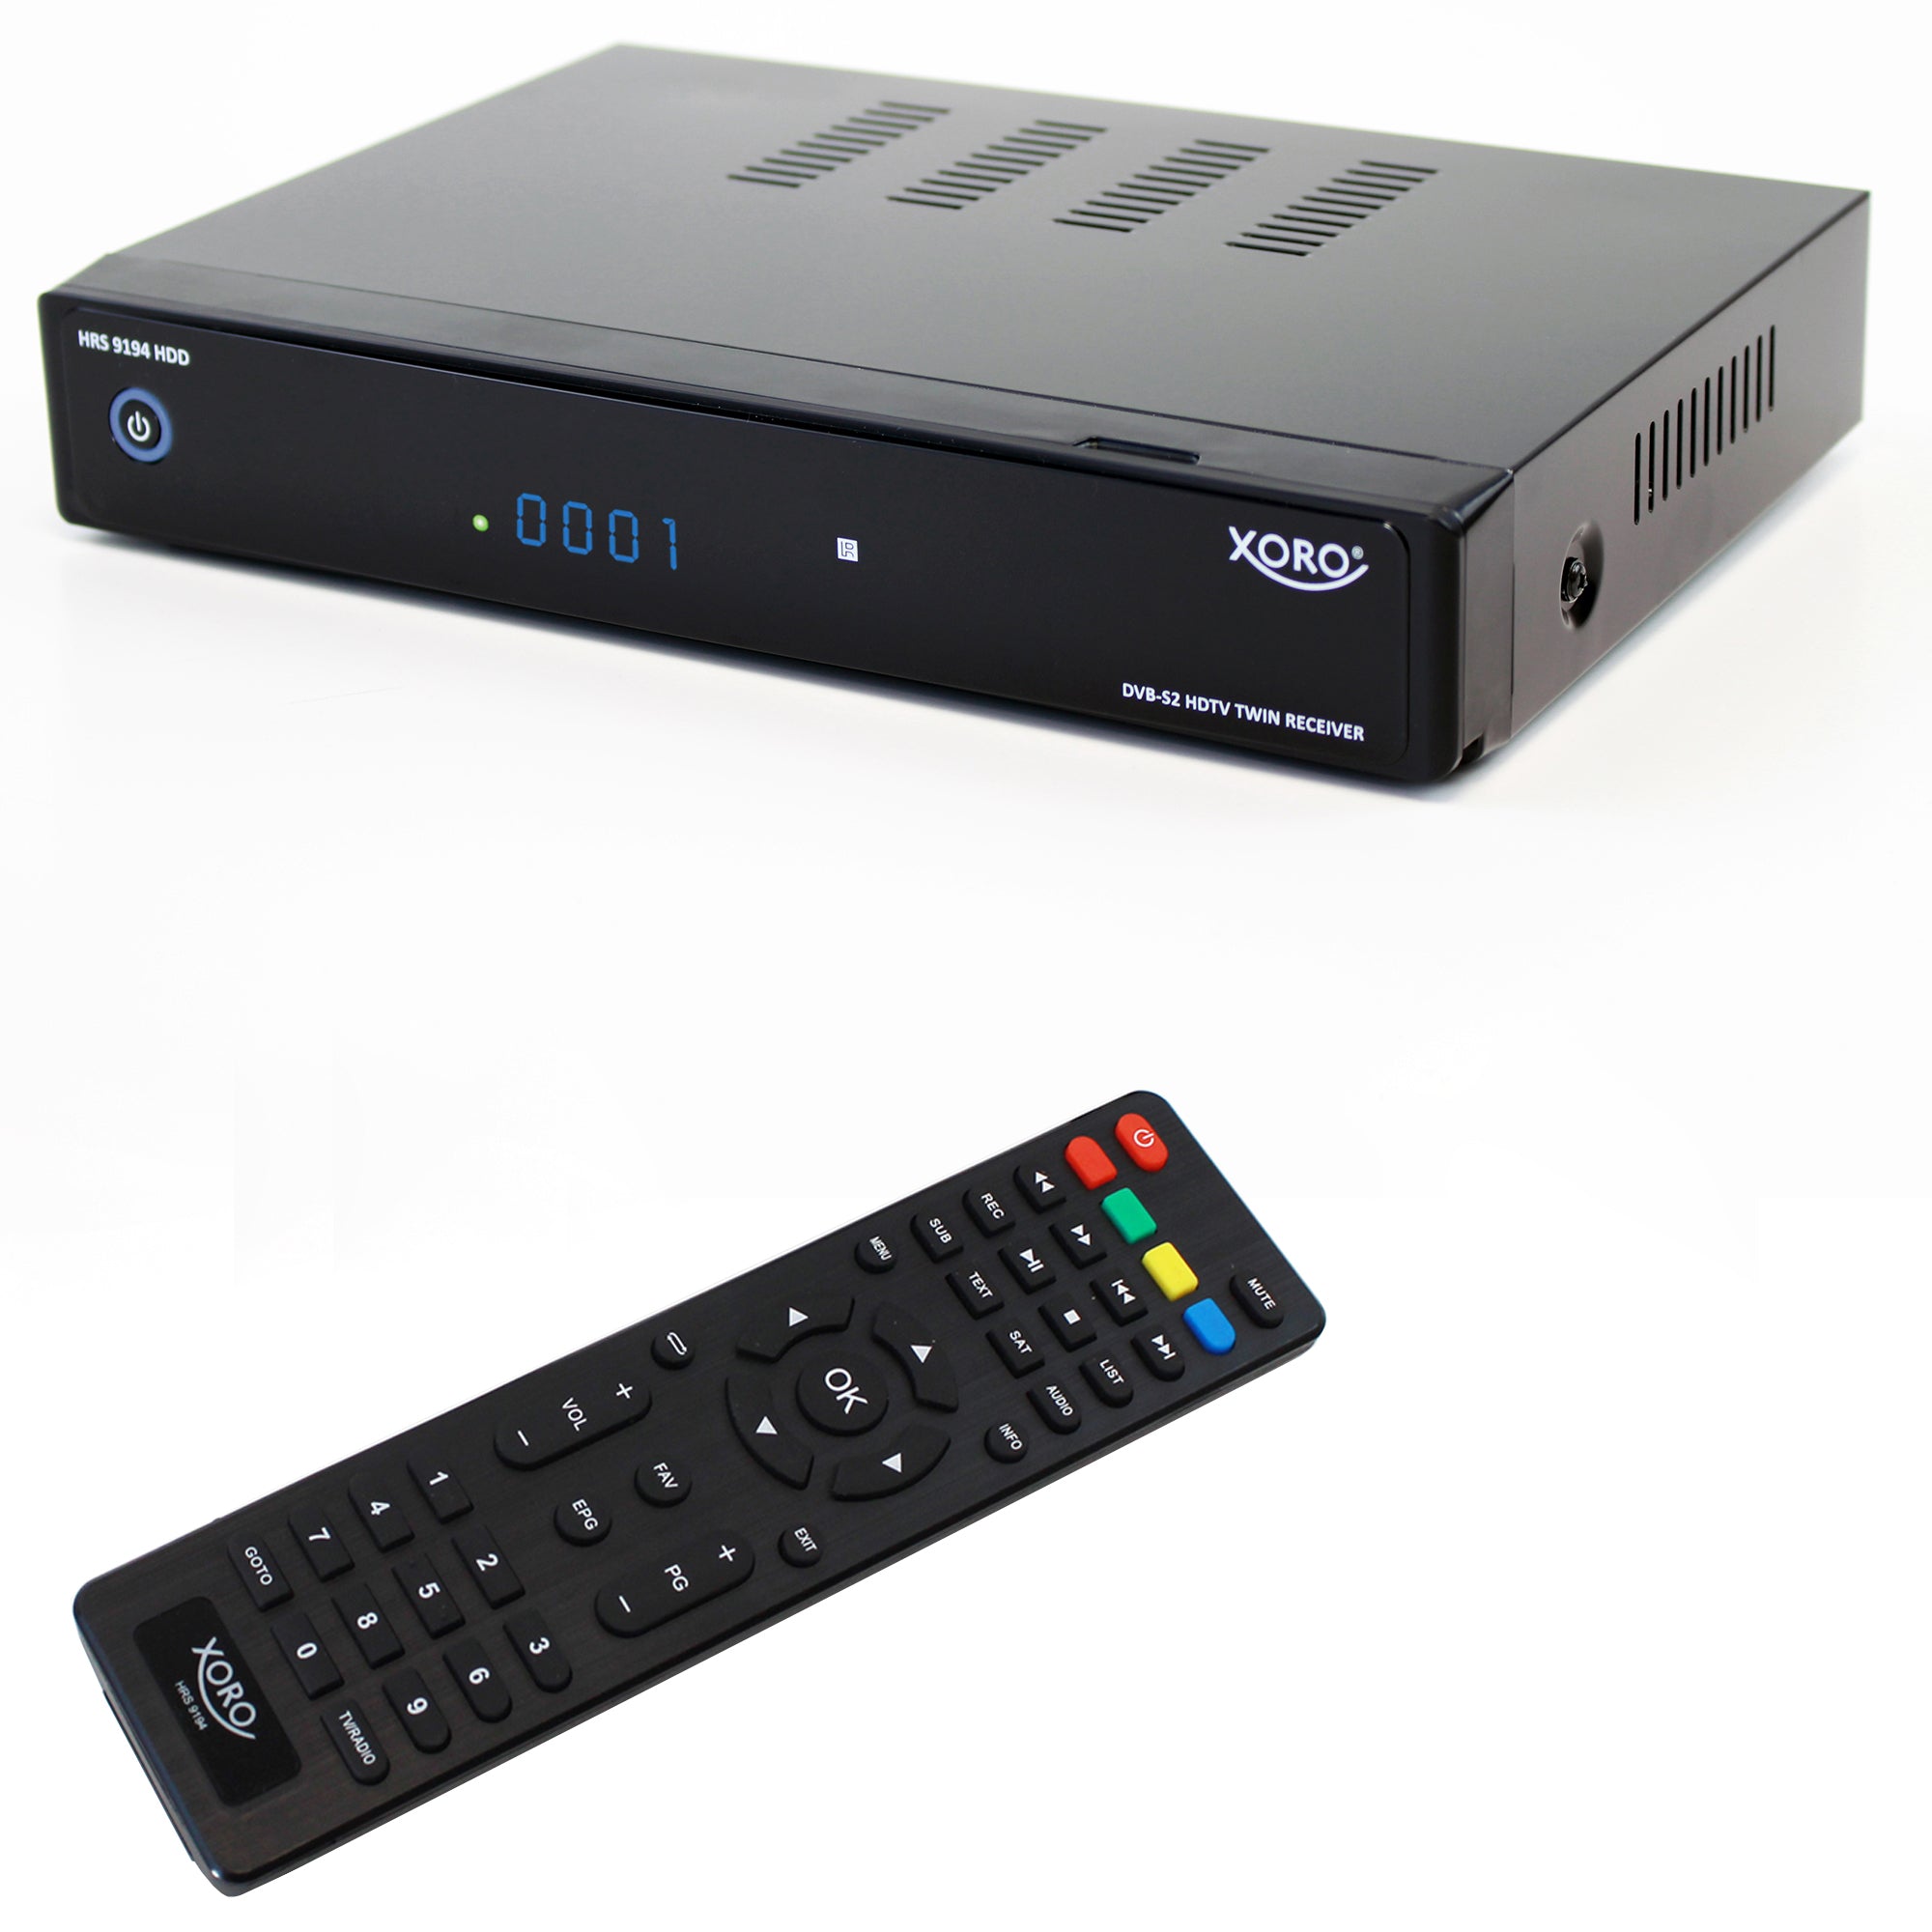 XORO HRS 9194 HDD (2TB) HD TWIN Satellitenreceiver mit integrierter 2TB (2000 GB) Festplatte